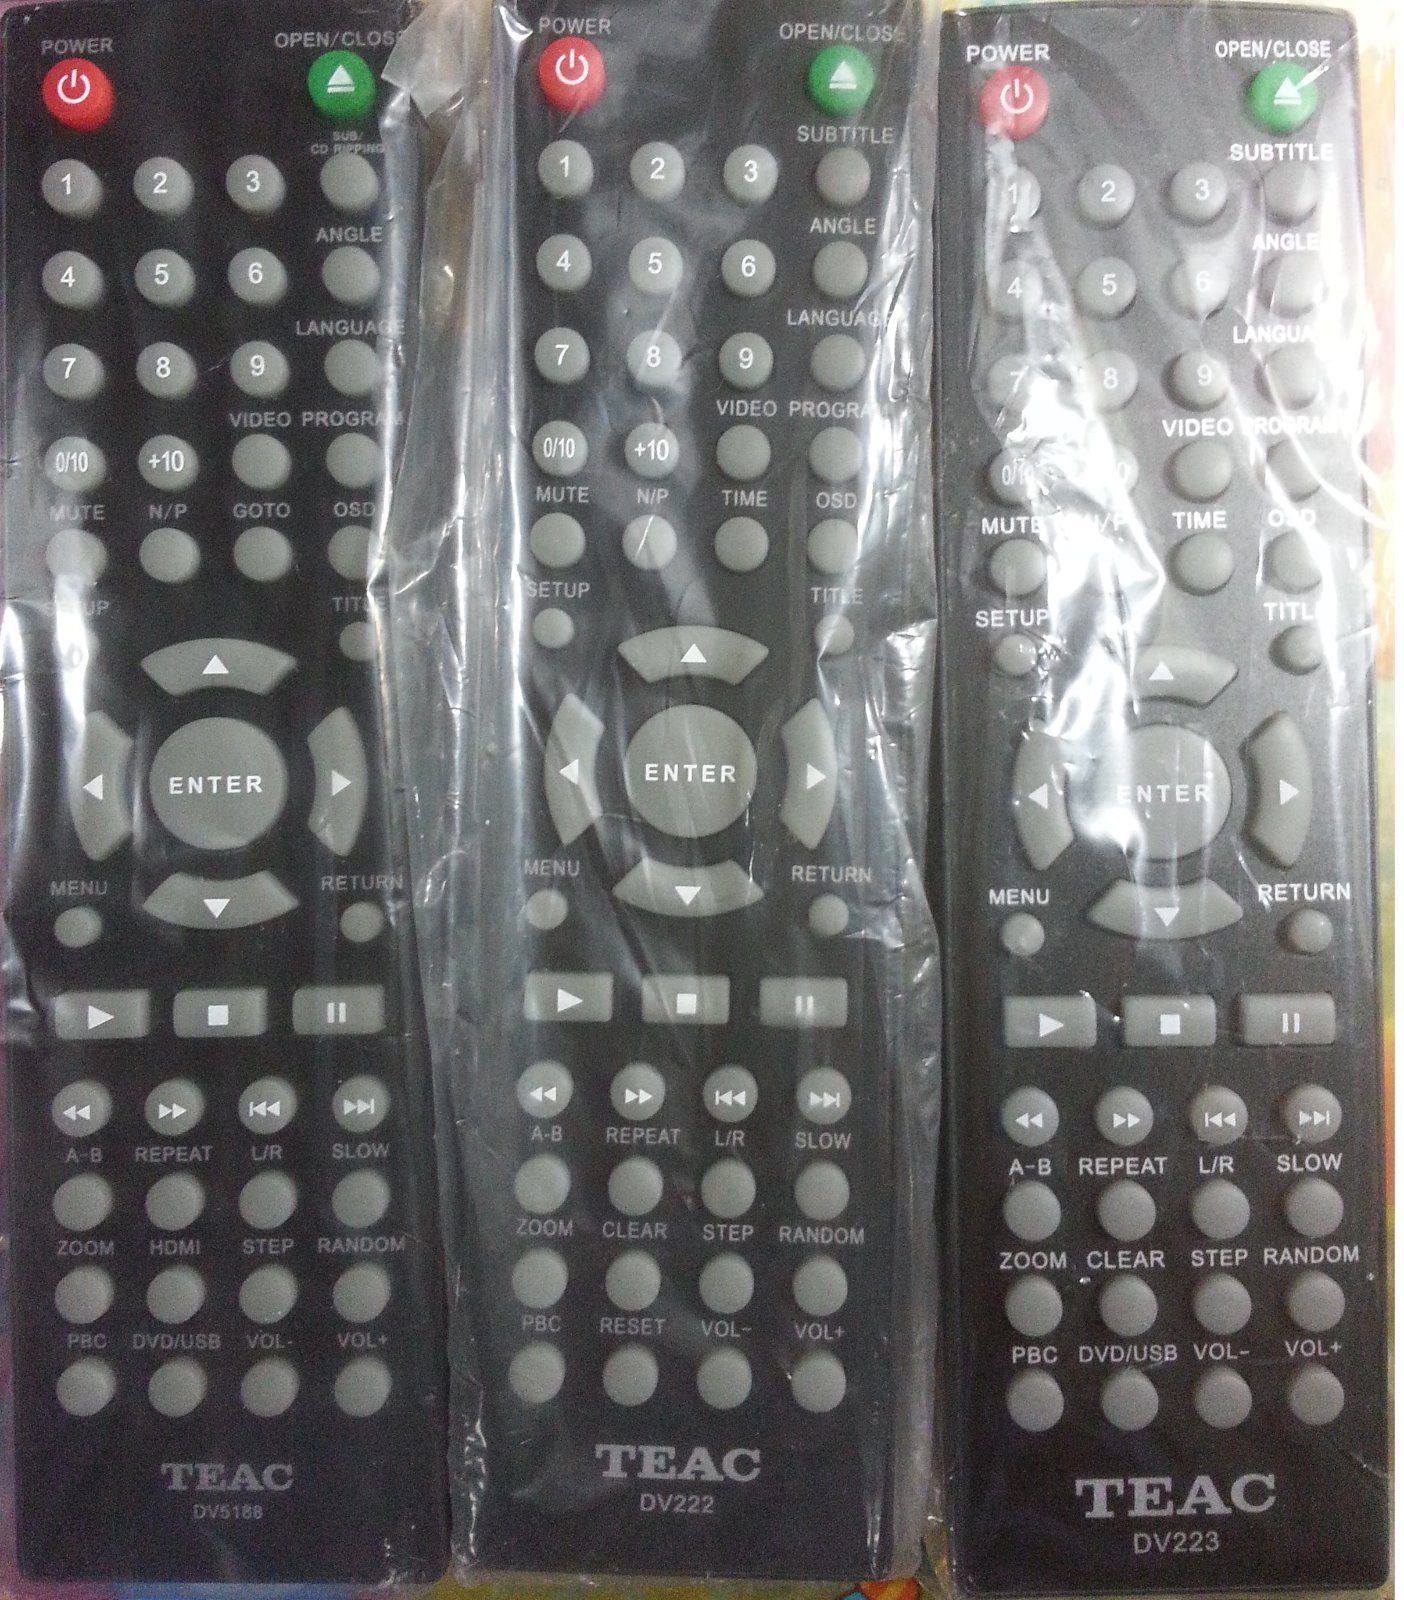 TEAC DV5199 Remote Controls